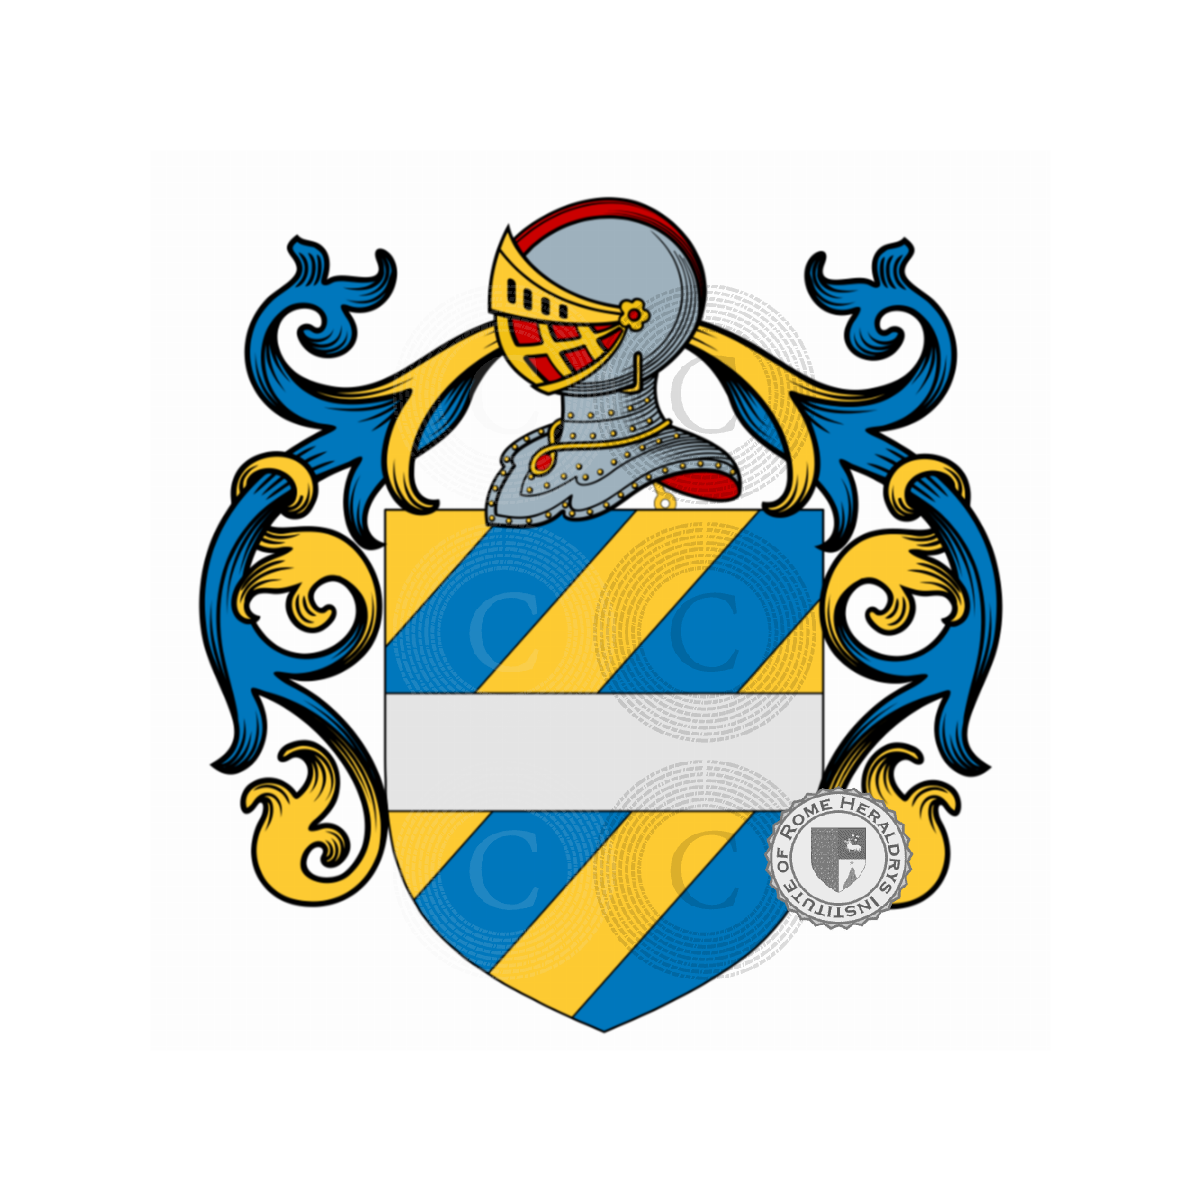 Wappen der FamilieBianchi, Bianchi